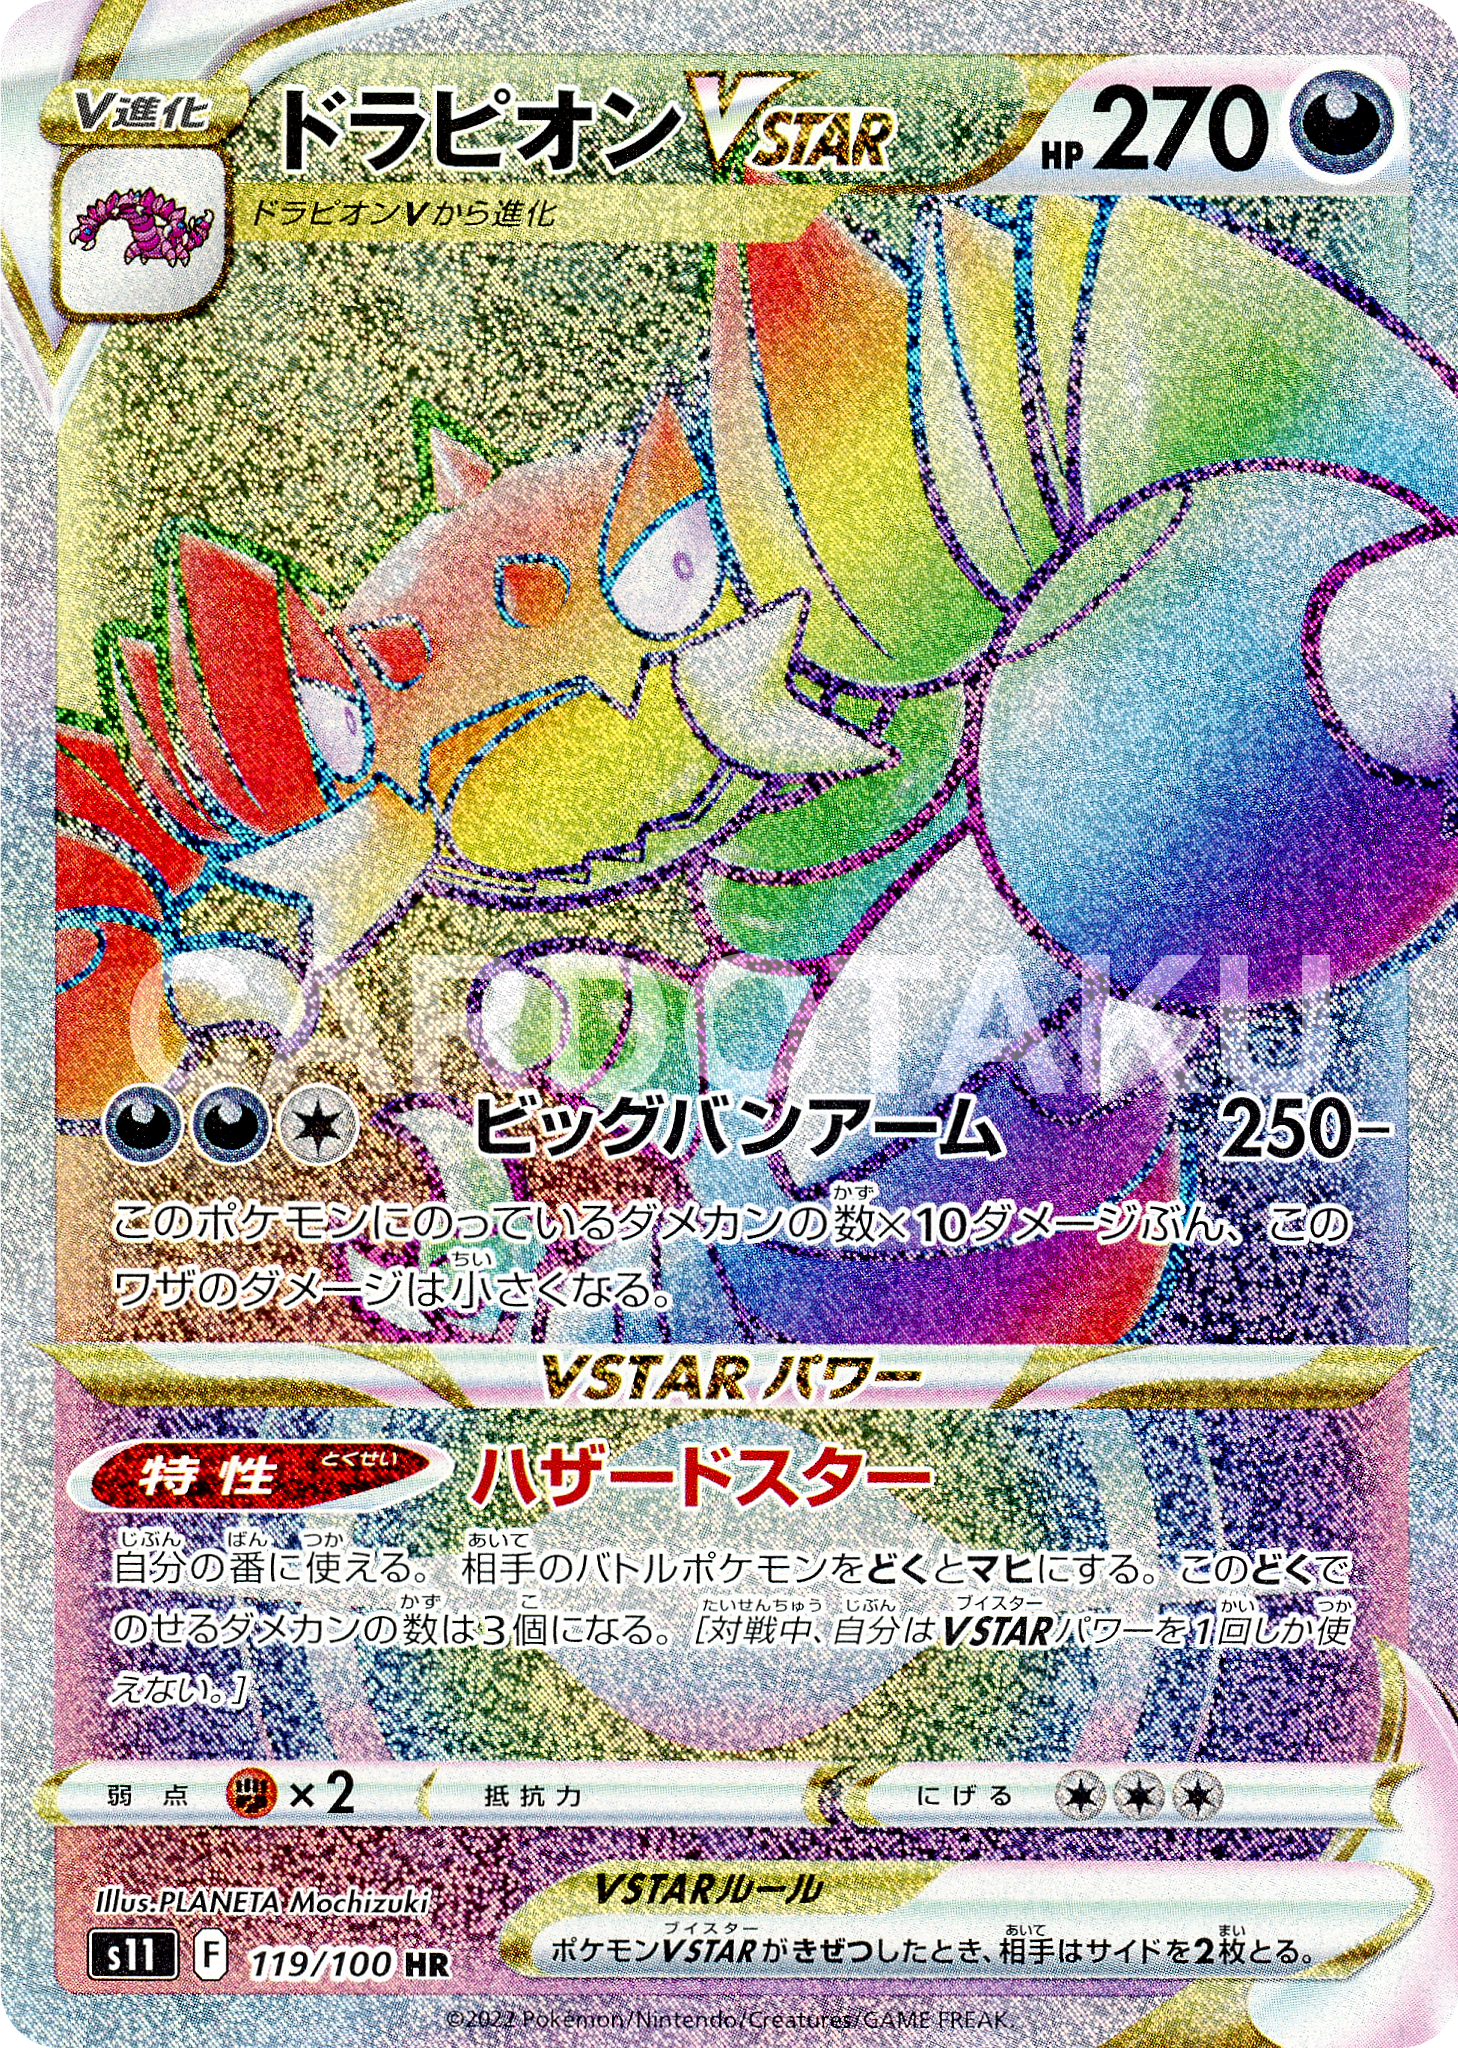 Pokemon TCG - s8 - 119/100 - Mew VMAX